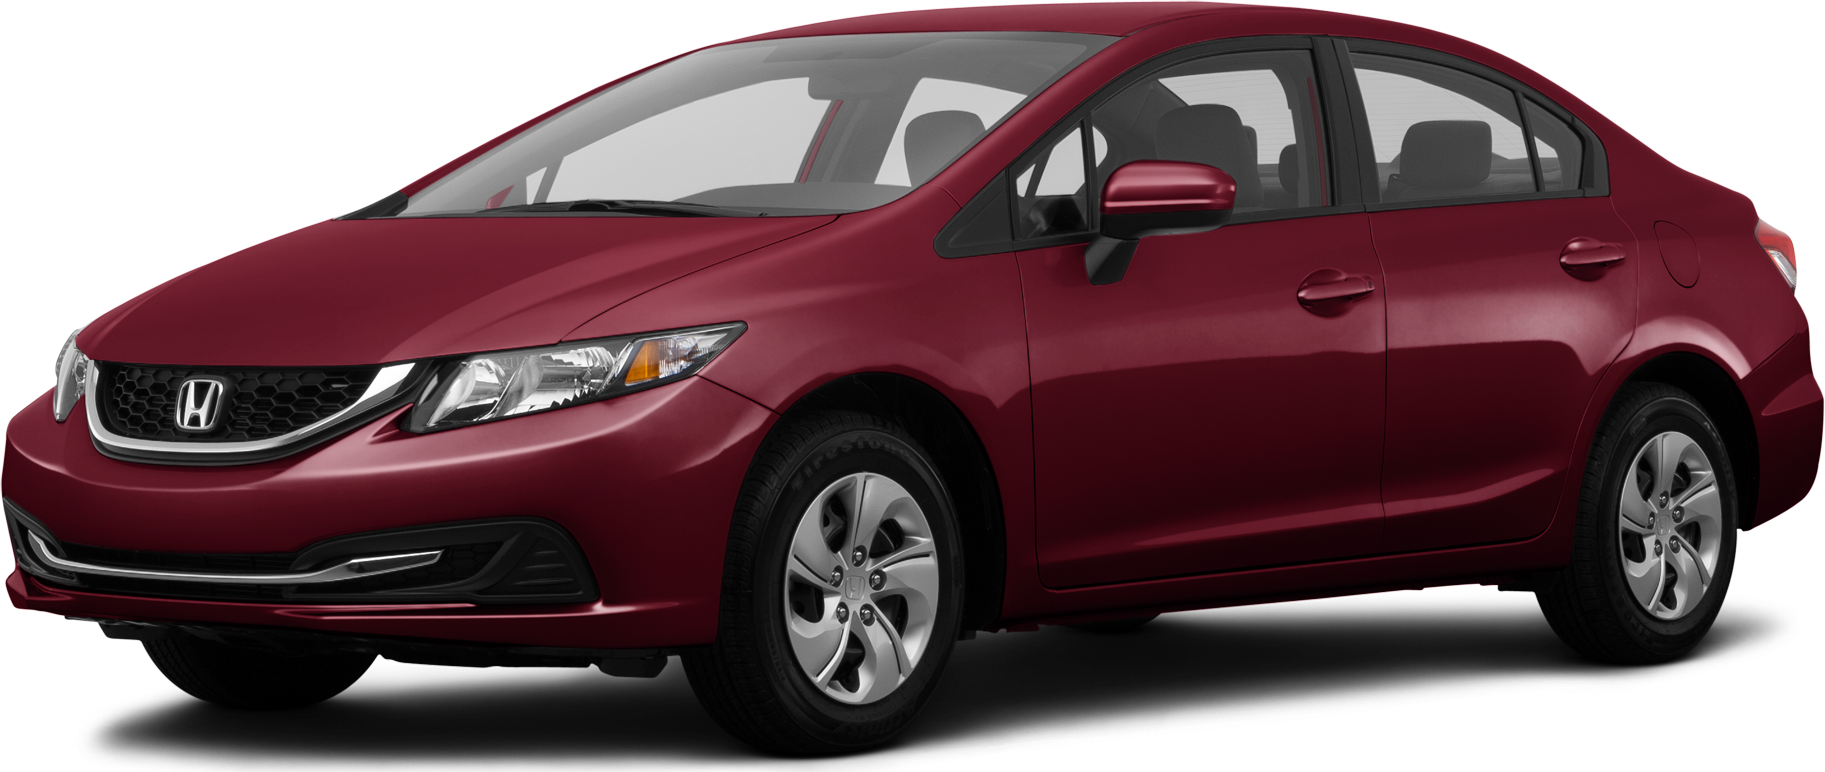 2014 Honda Civic Price Value Ratings And Reviews Kelley Blue Book